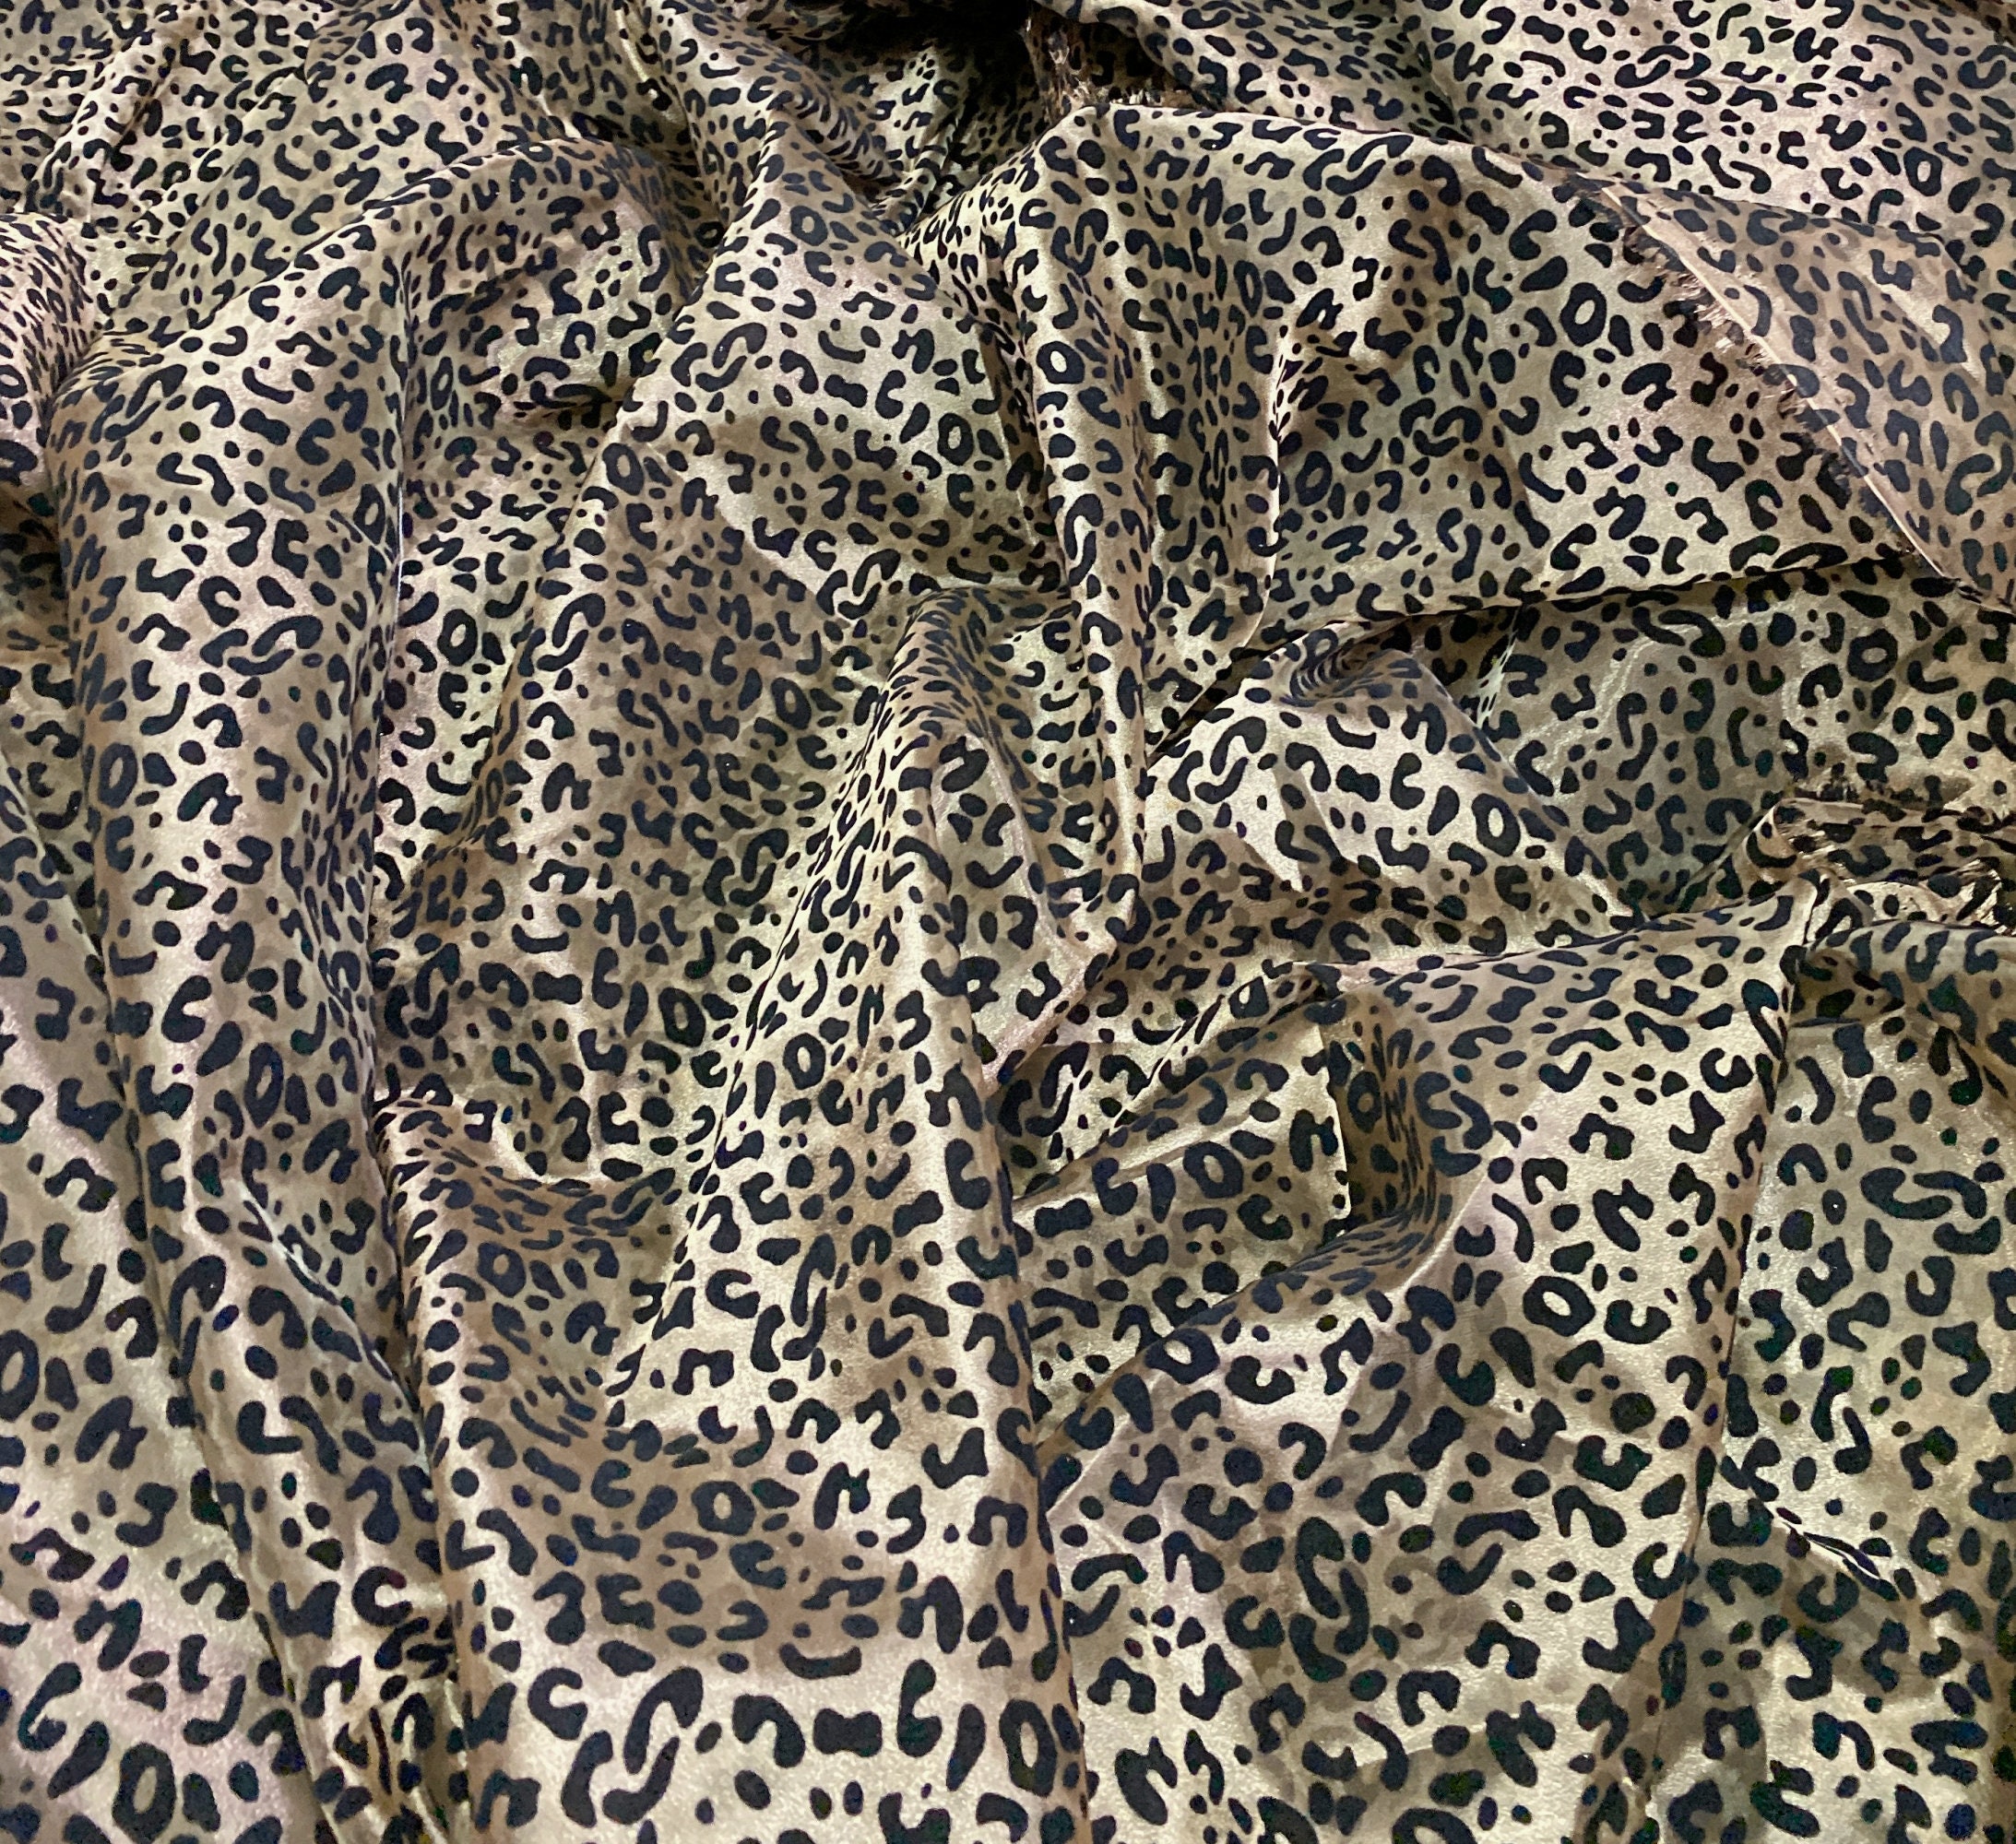 3D Leopard Animal Prints on Soft Organdy Fabric 60w - Etsy